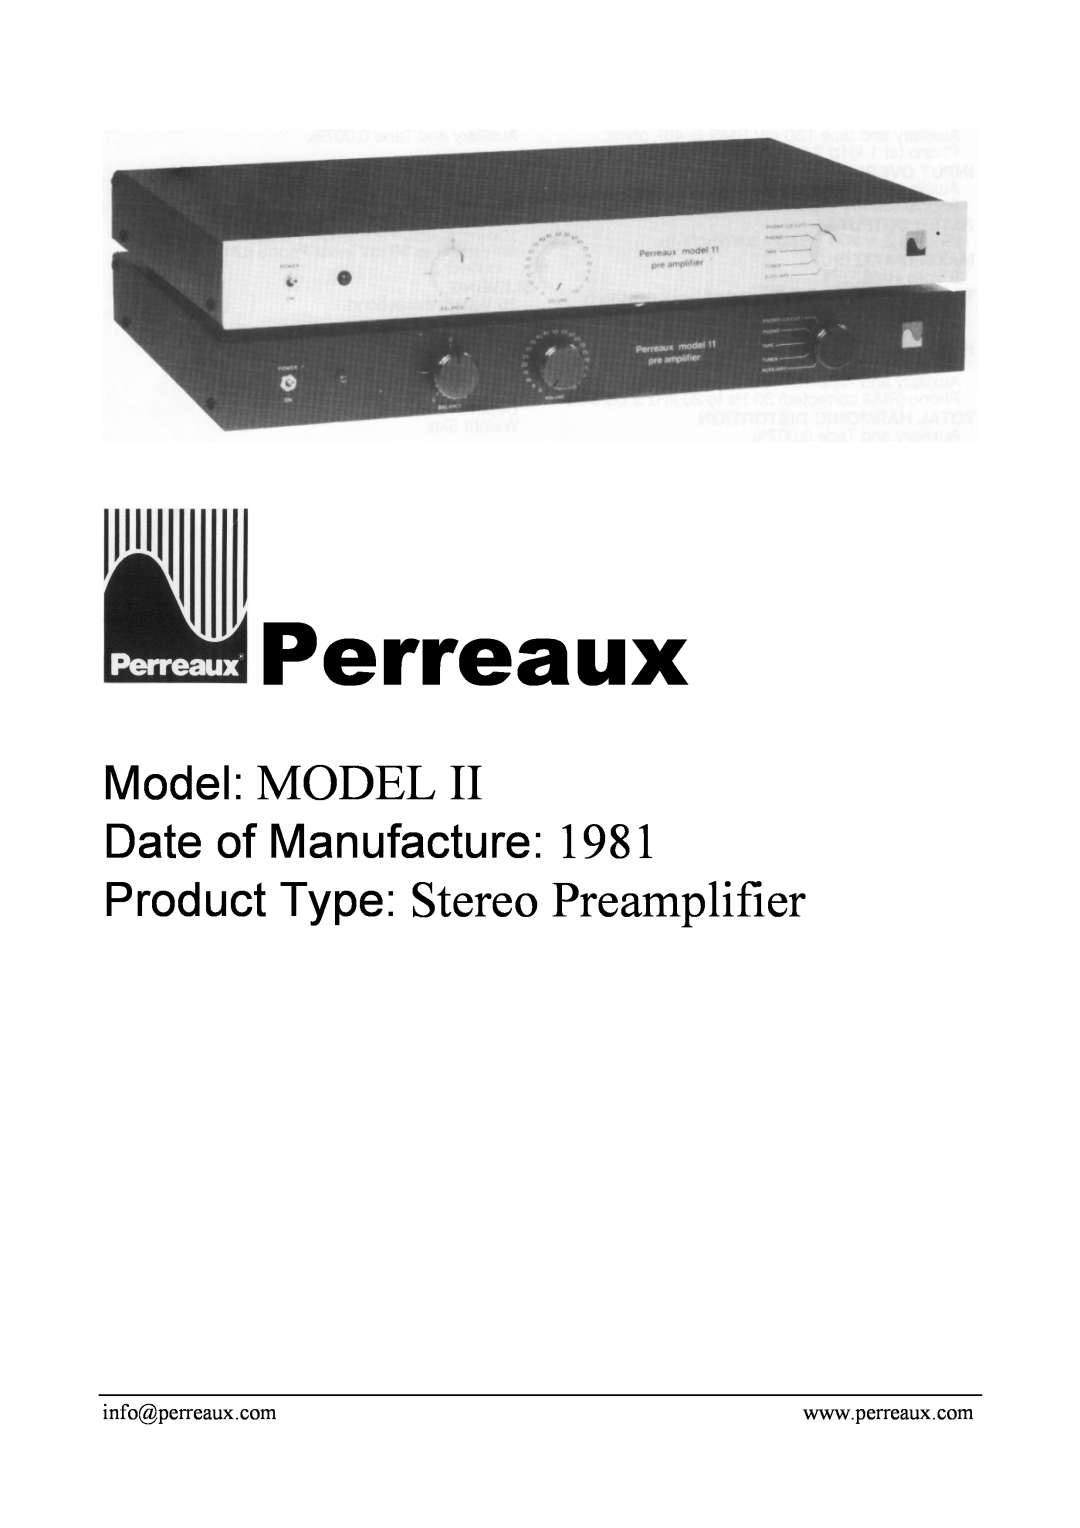 Perreaux Model II manual Perreaux, Model MODEL, Product Type Stereo Preamplifier, Date of Manufacture 